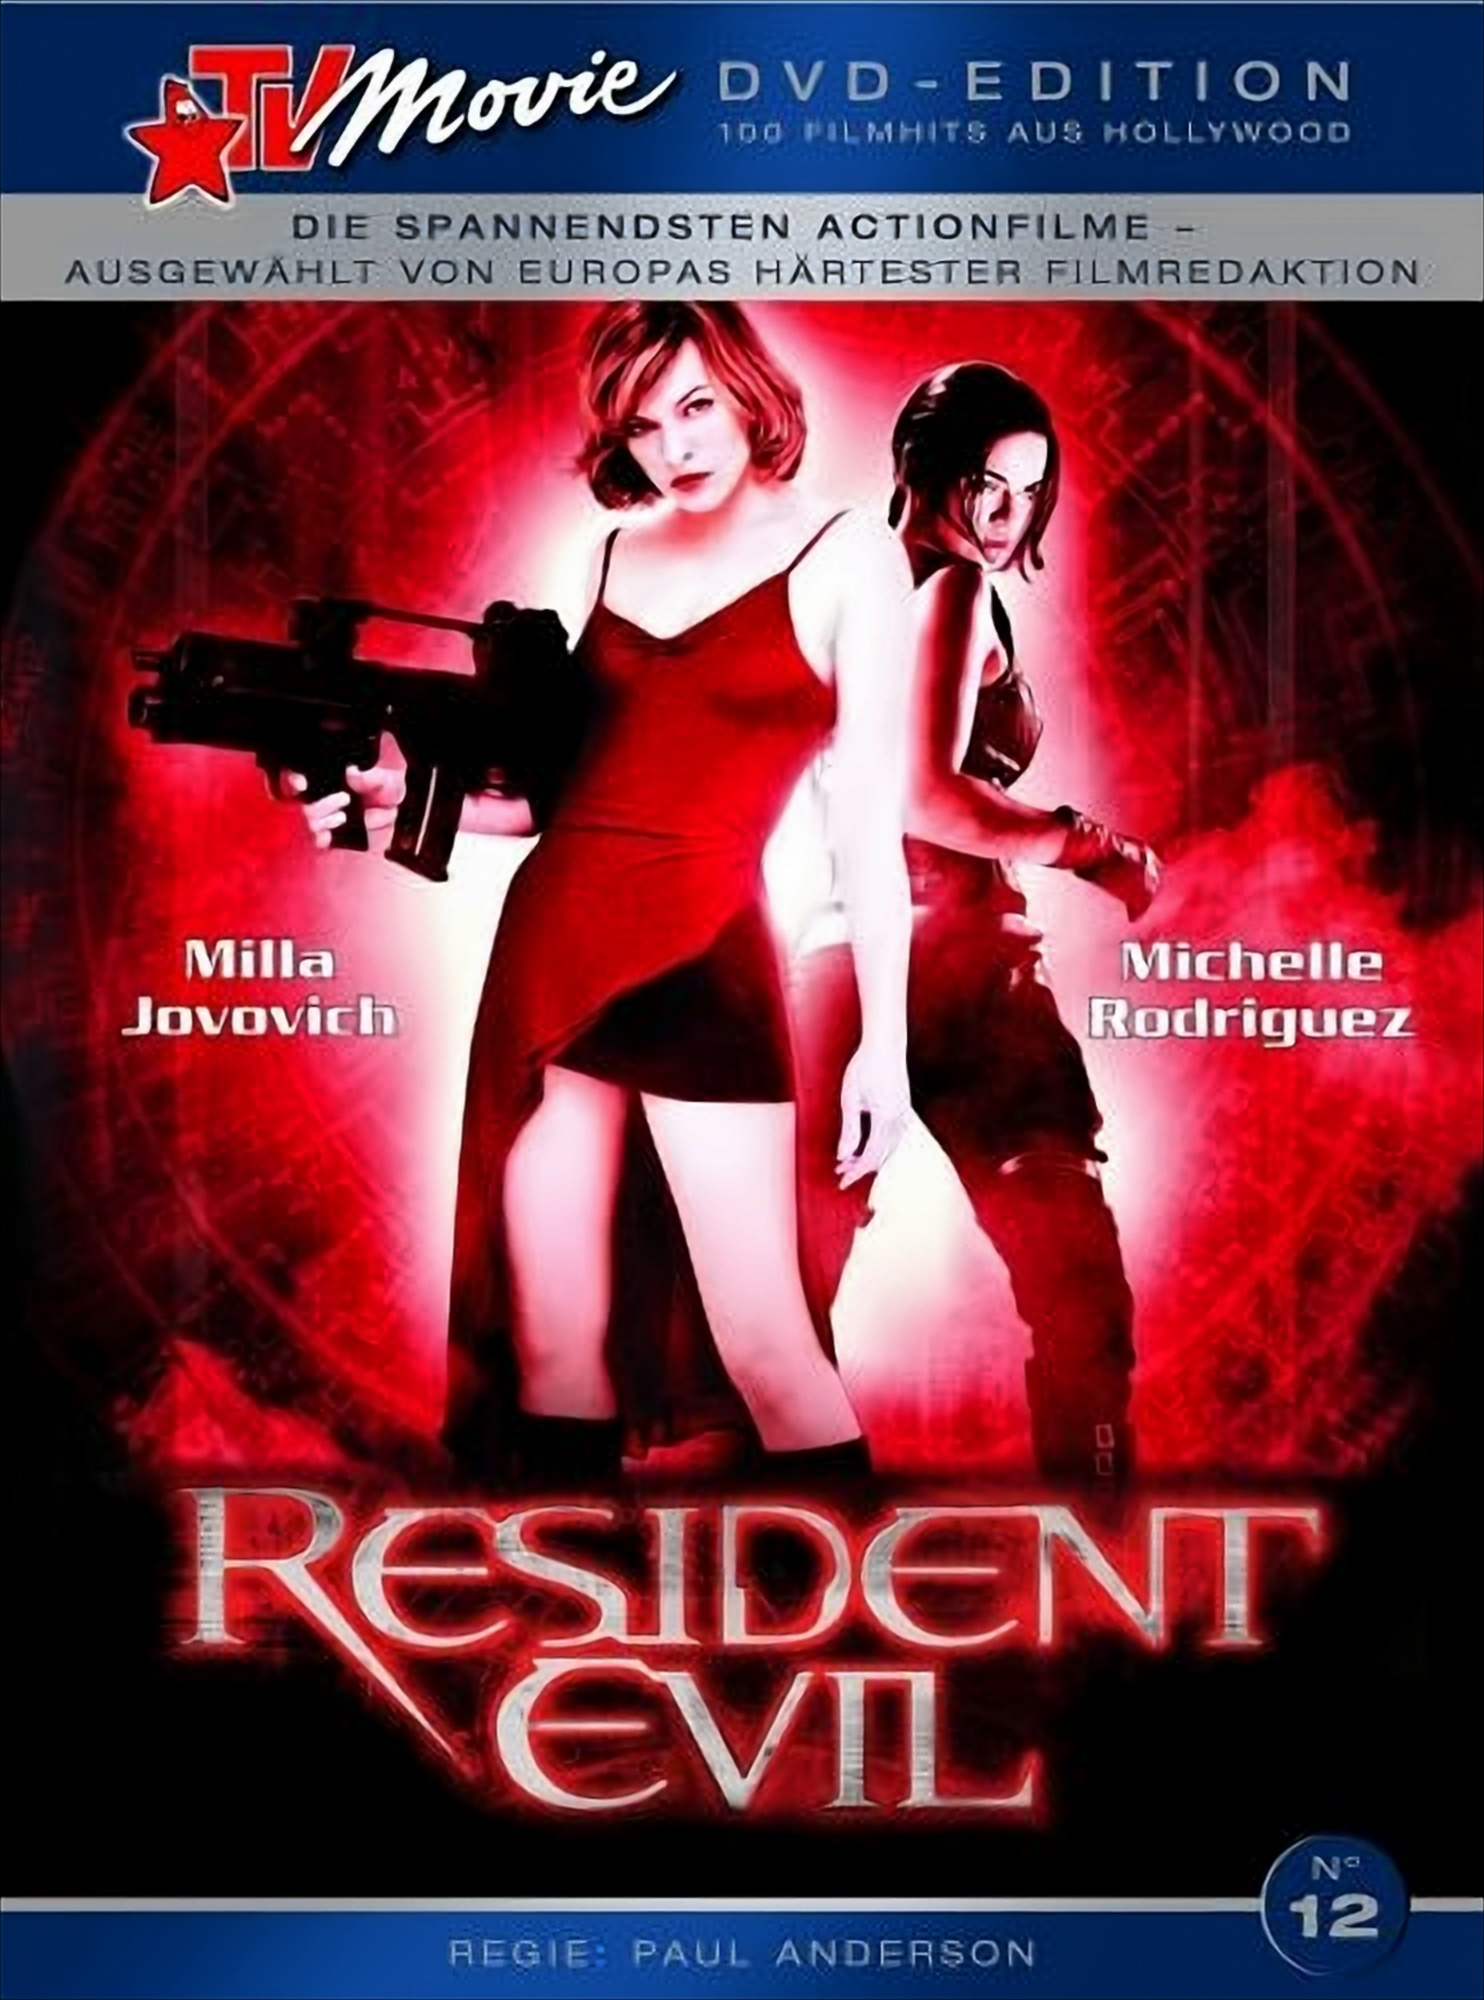 DVD - TV Evil Movie Resident Edition